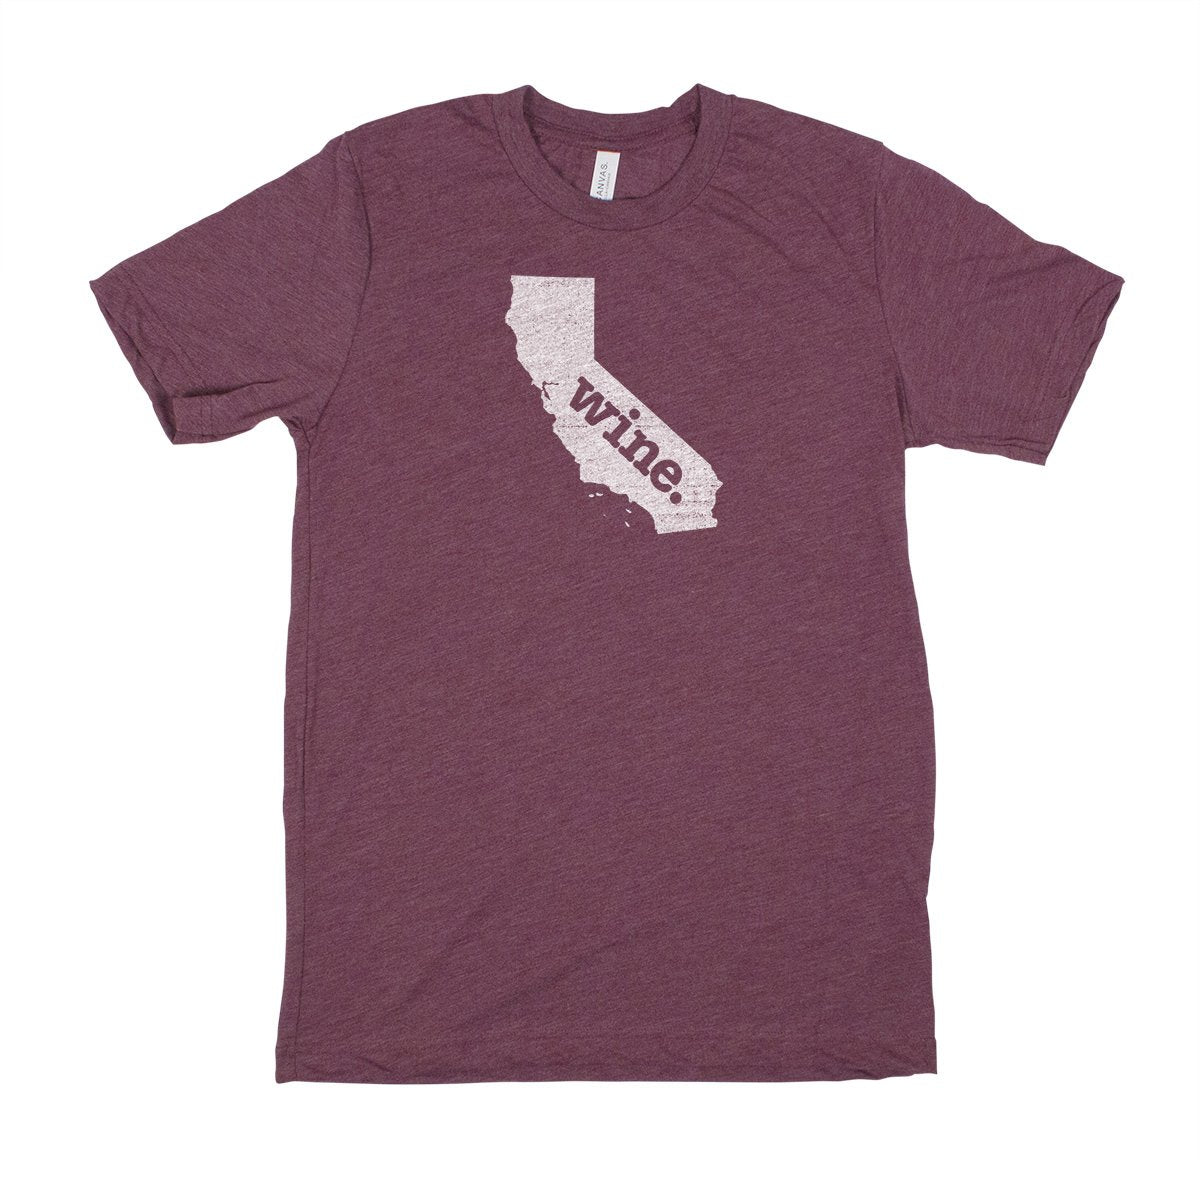 bike. Men's Unisex T-Shirt - Minnesota